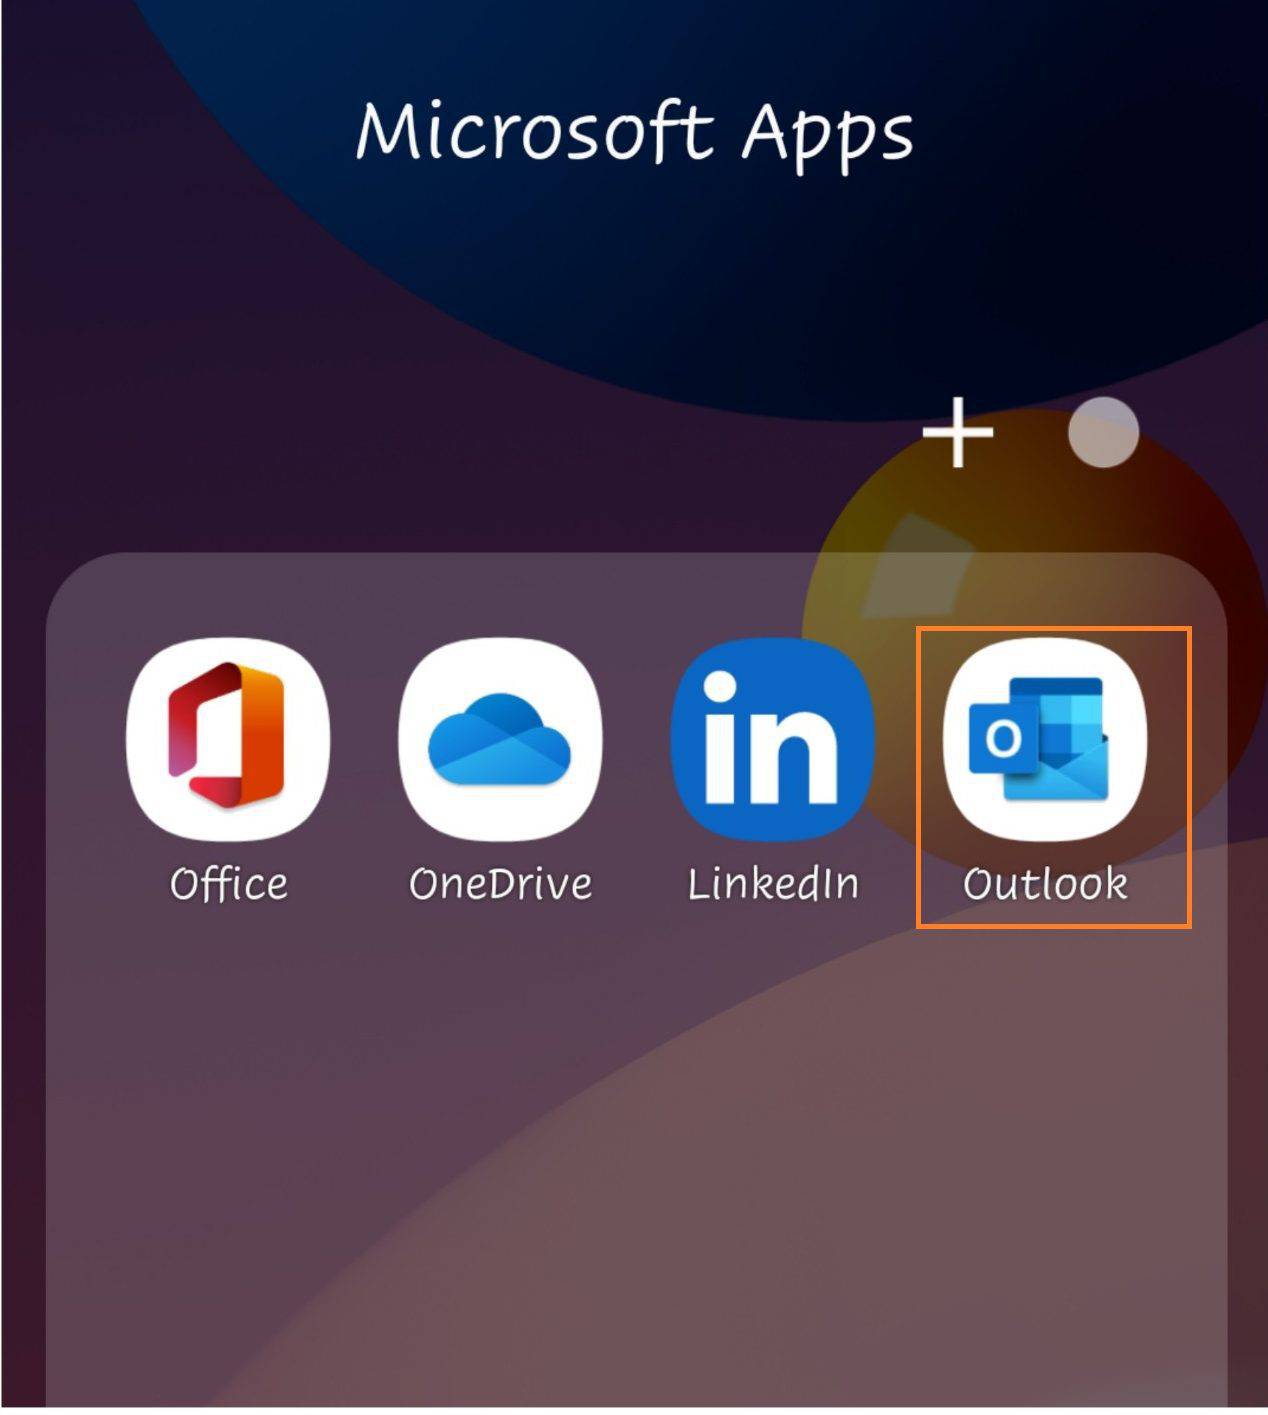 1st-step for Outlook app